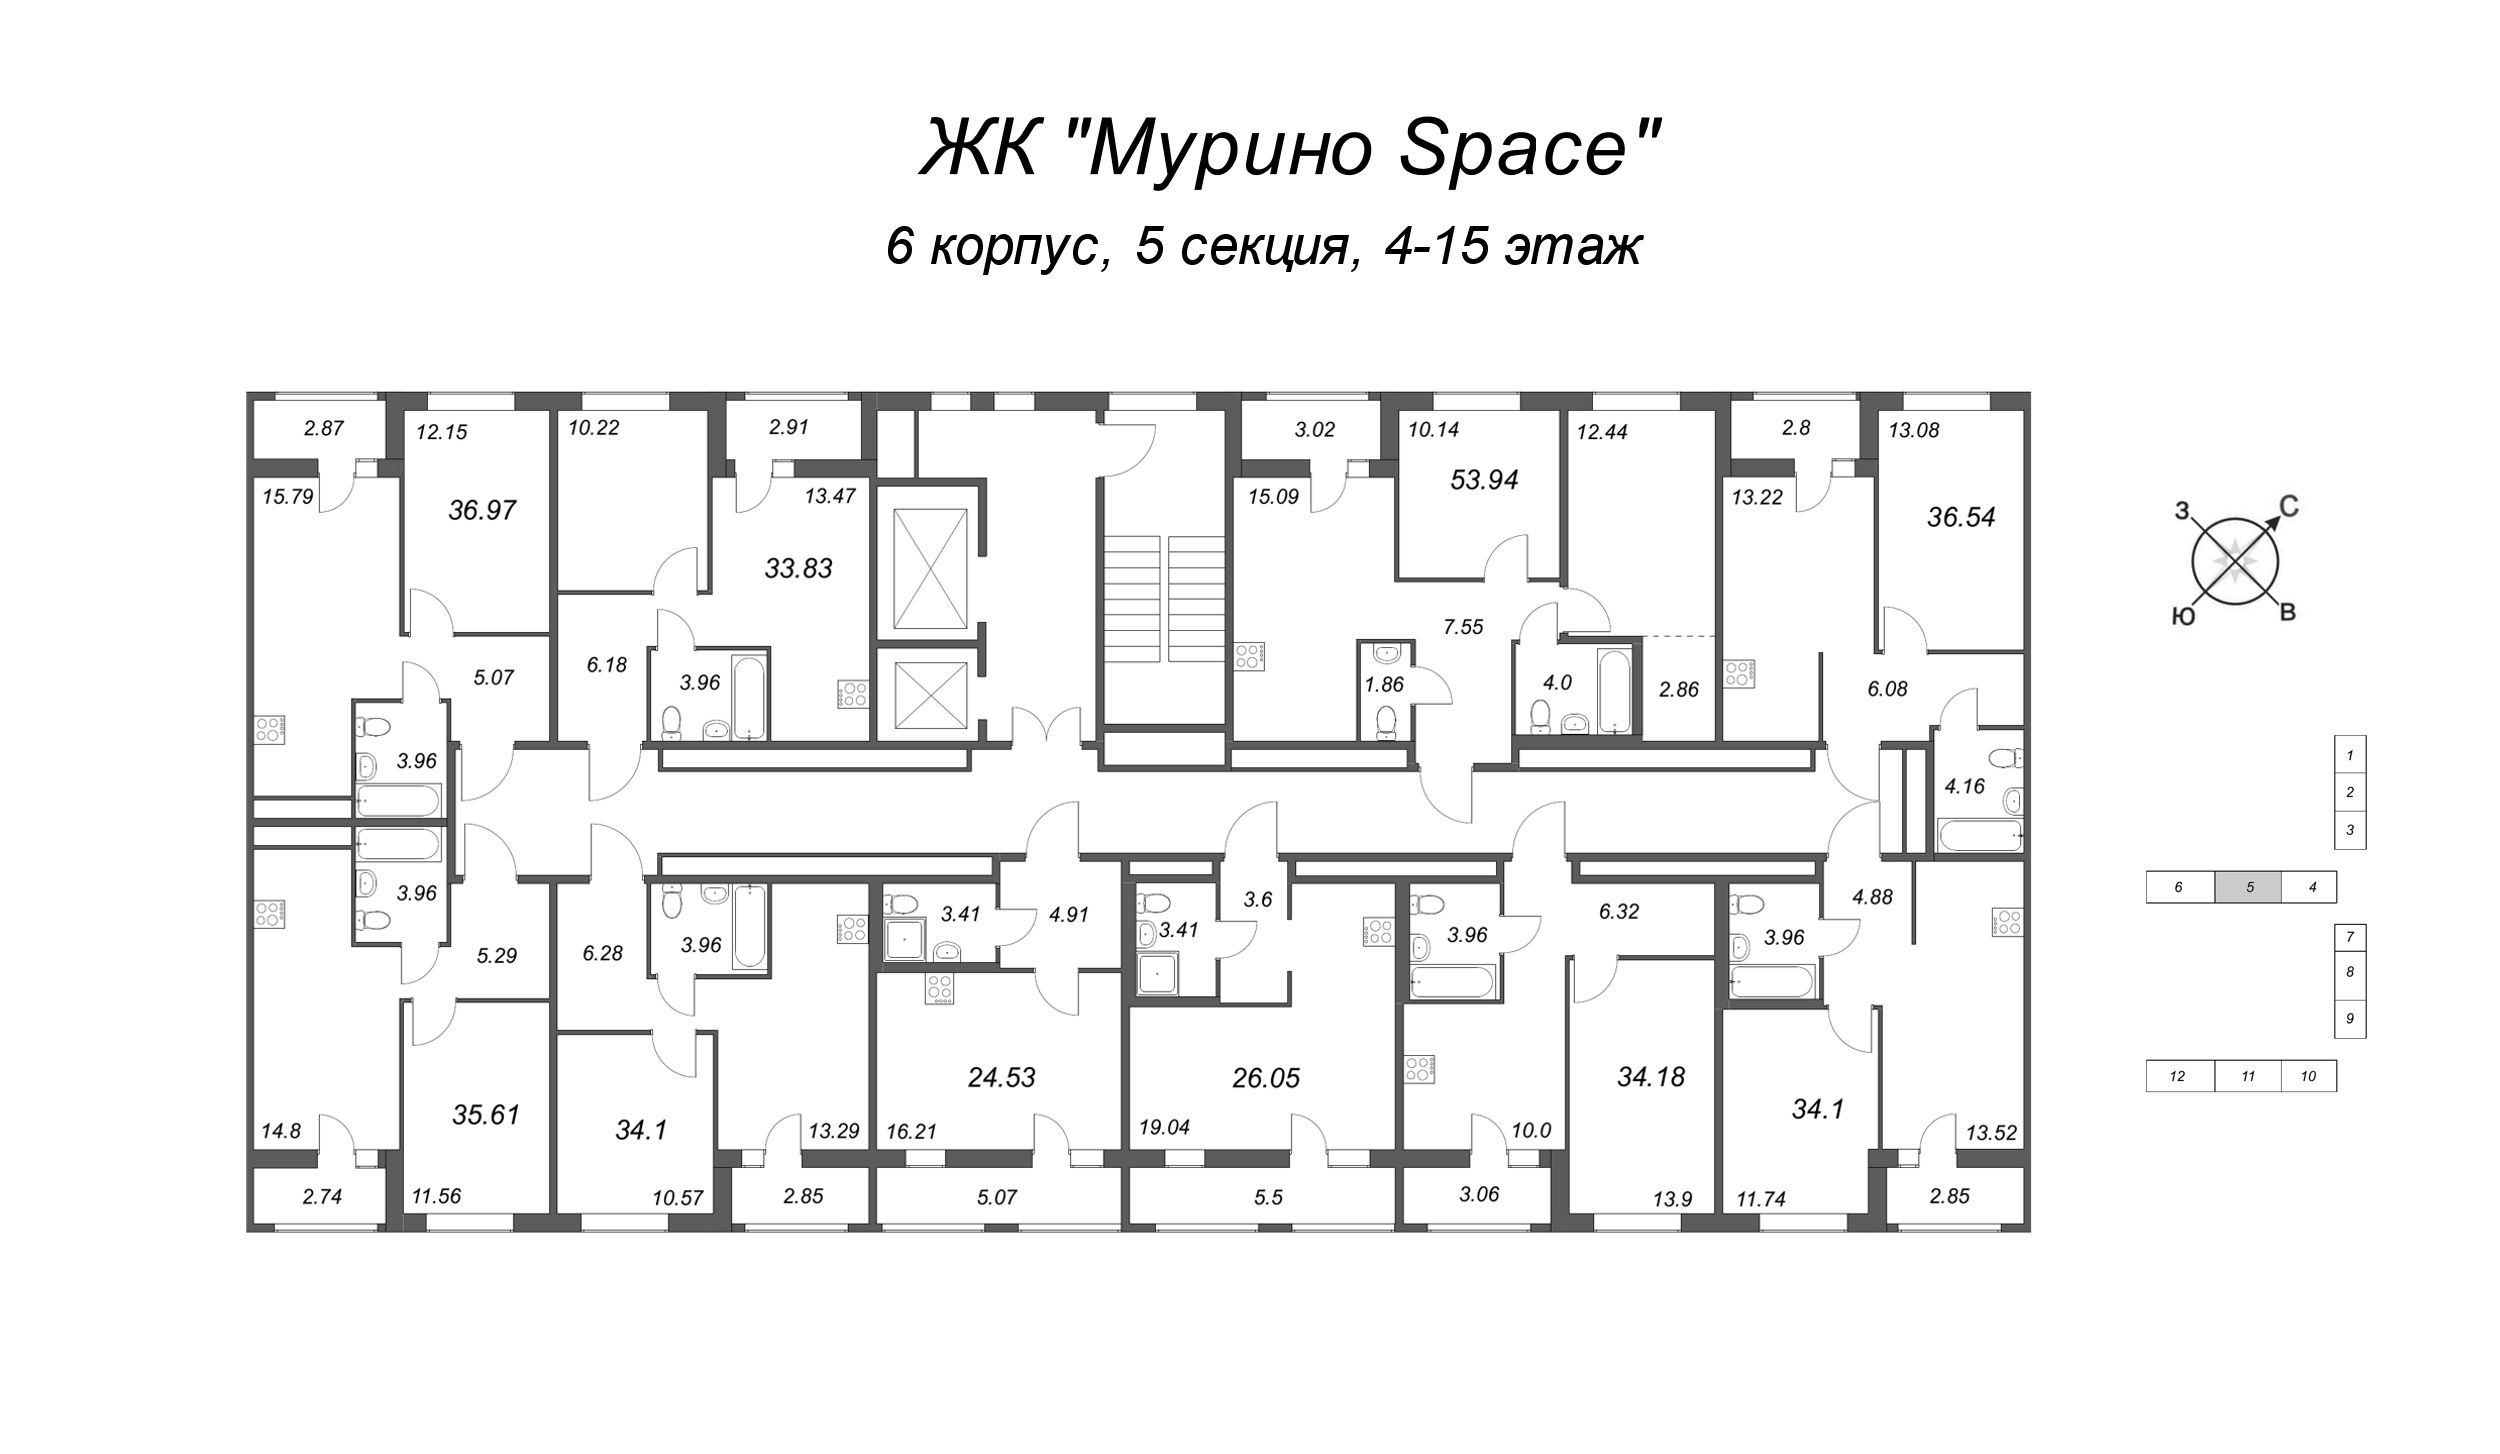 2-комнатная (Евро) квартира, 34.1 м² - планировка этажа